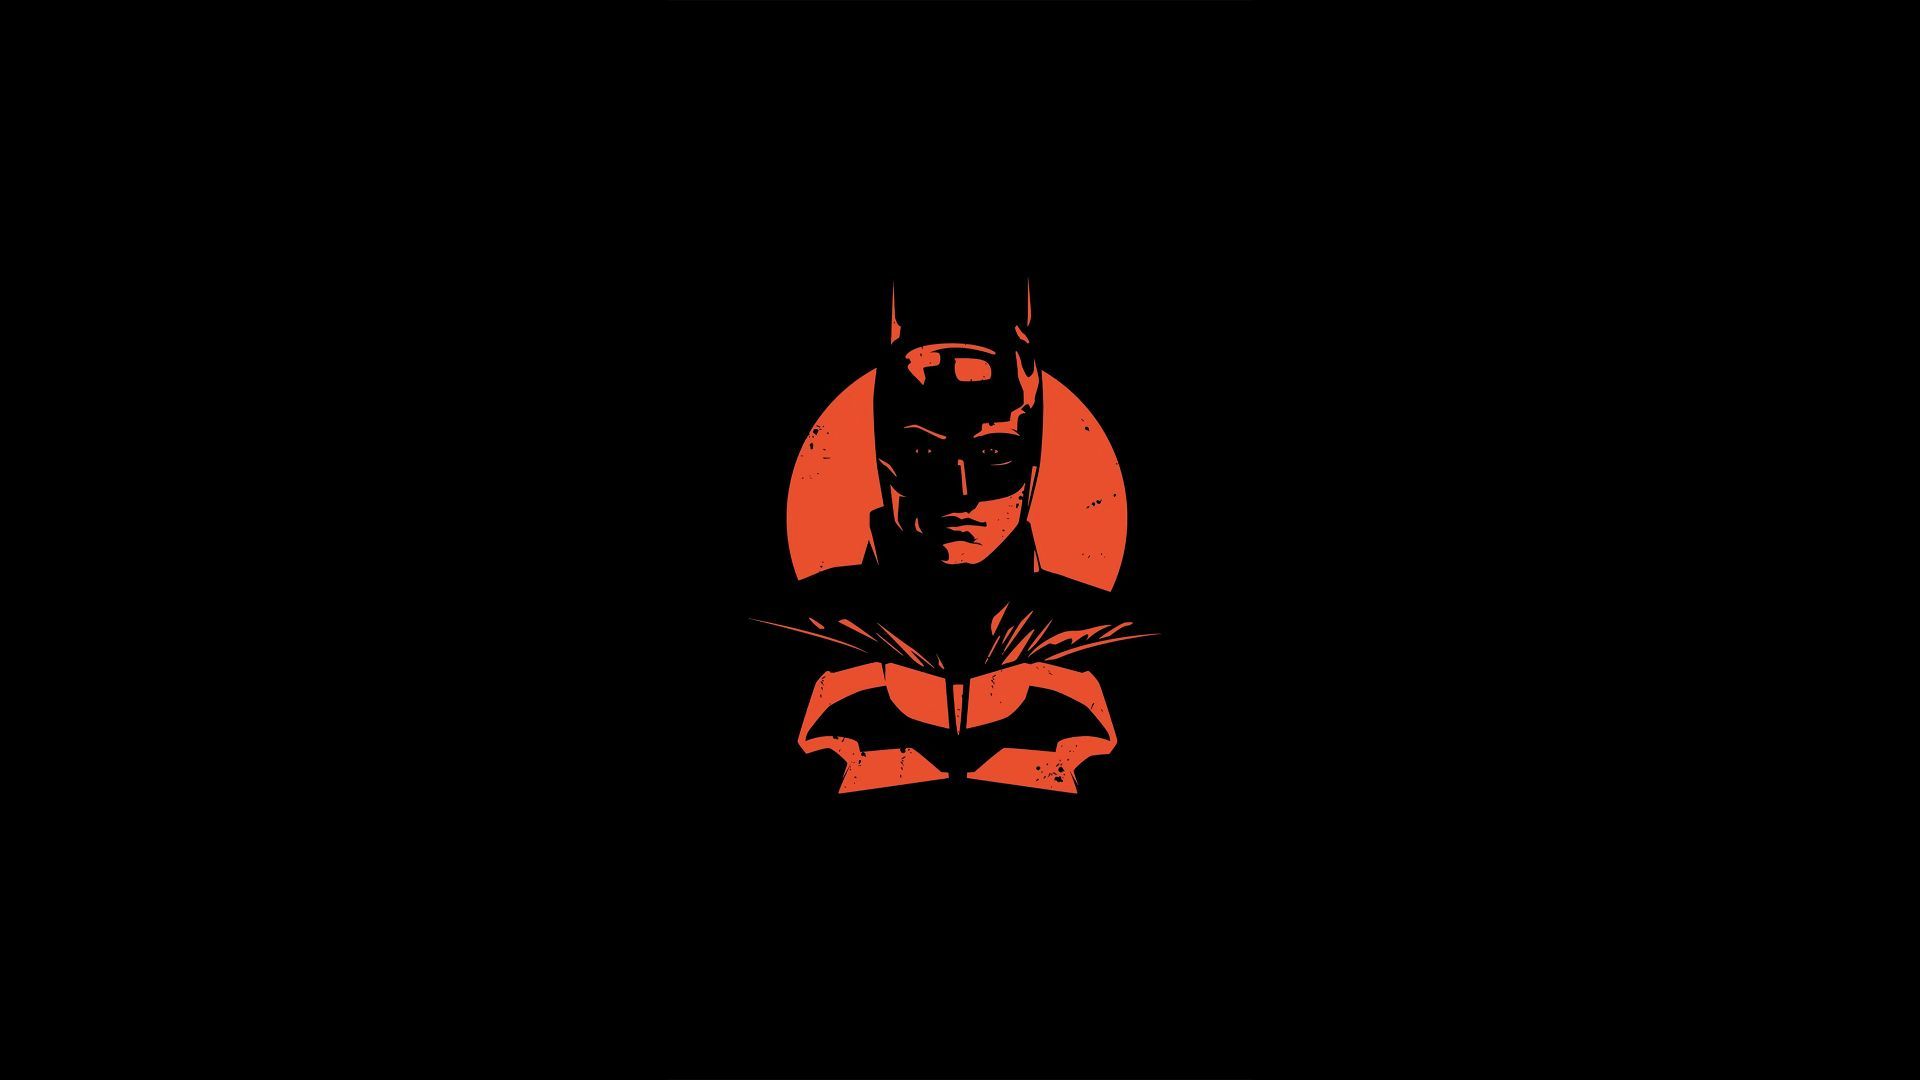 The batman, 2021 movie, dark & minimal wallpaper, HD image, picture, background, 754253